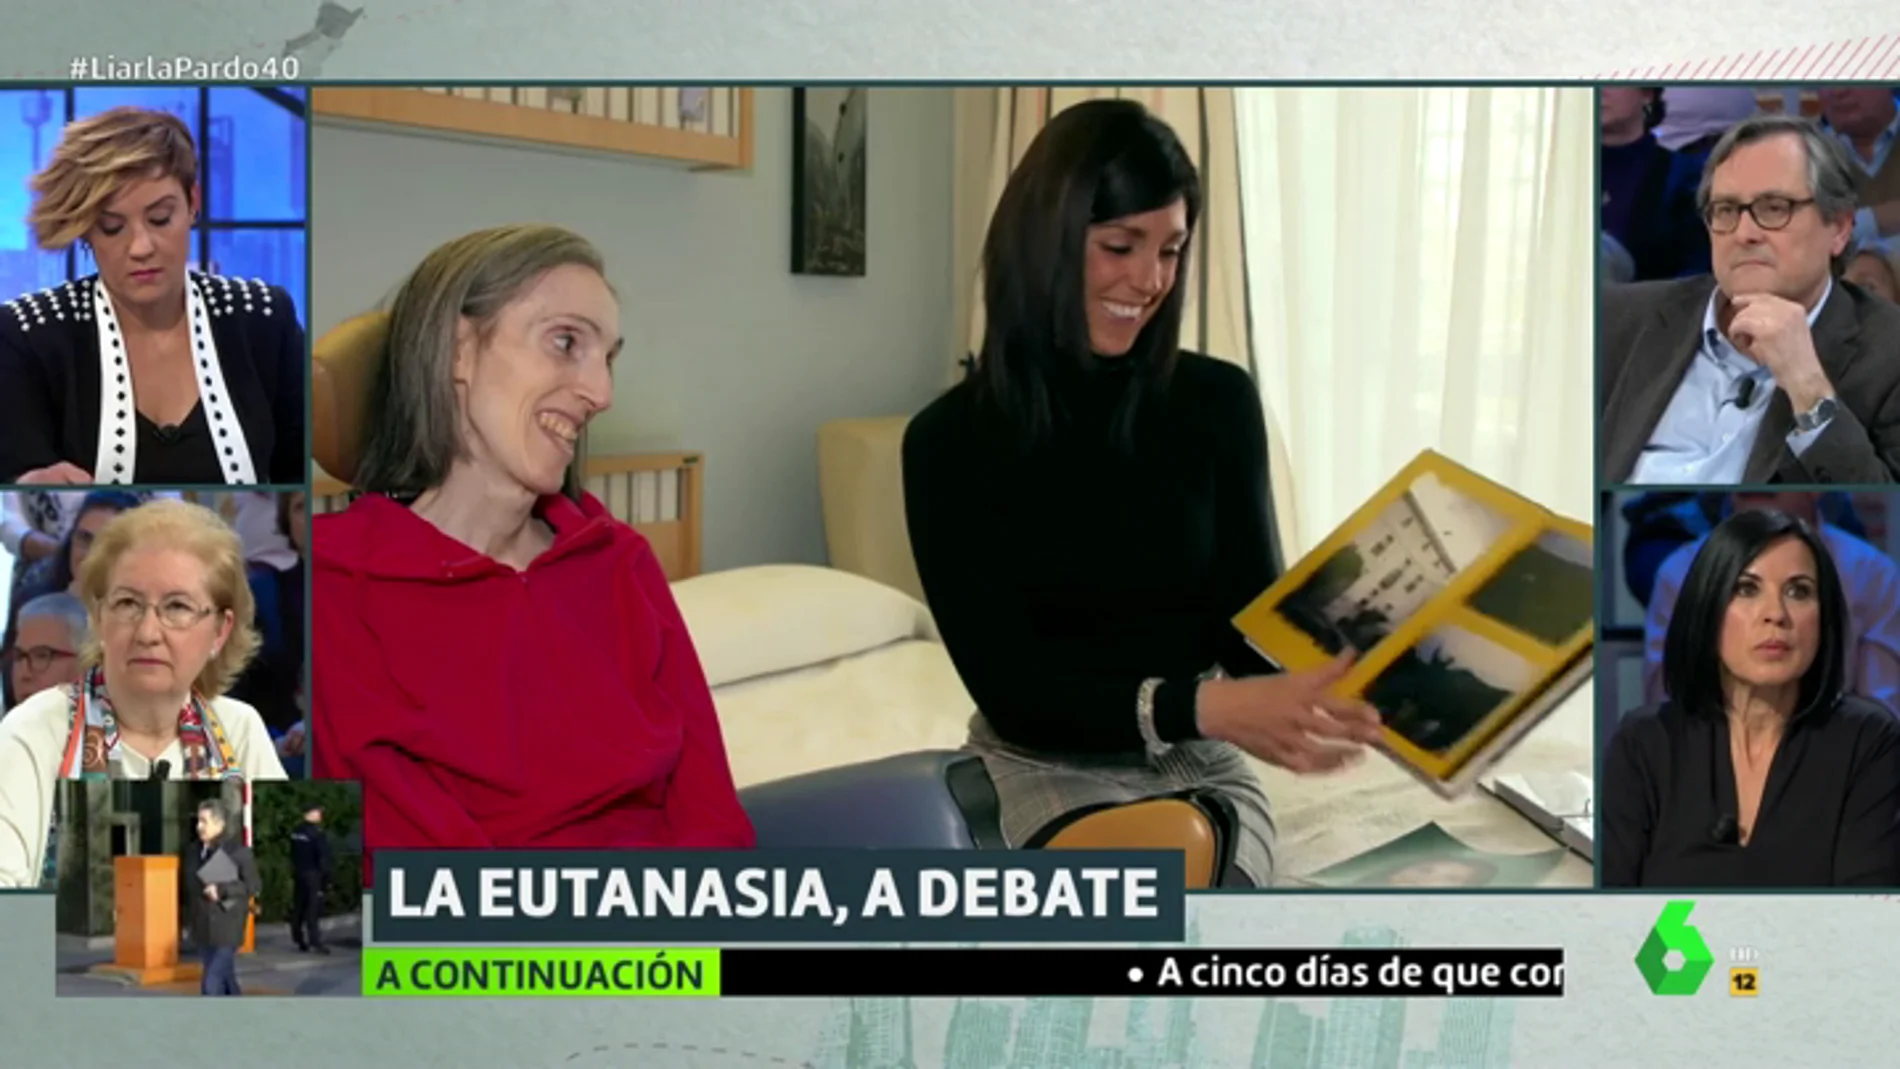 La estremecedora defensa de la eutanasia de Larraitz Chamorro, enferma de ELA: "Estoy cansada de sufrir"